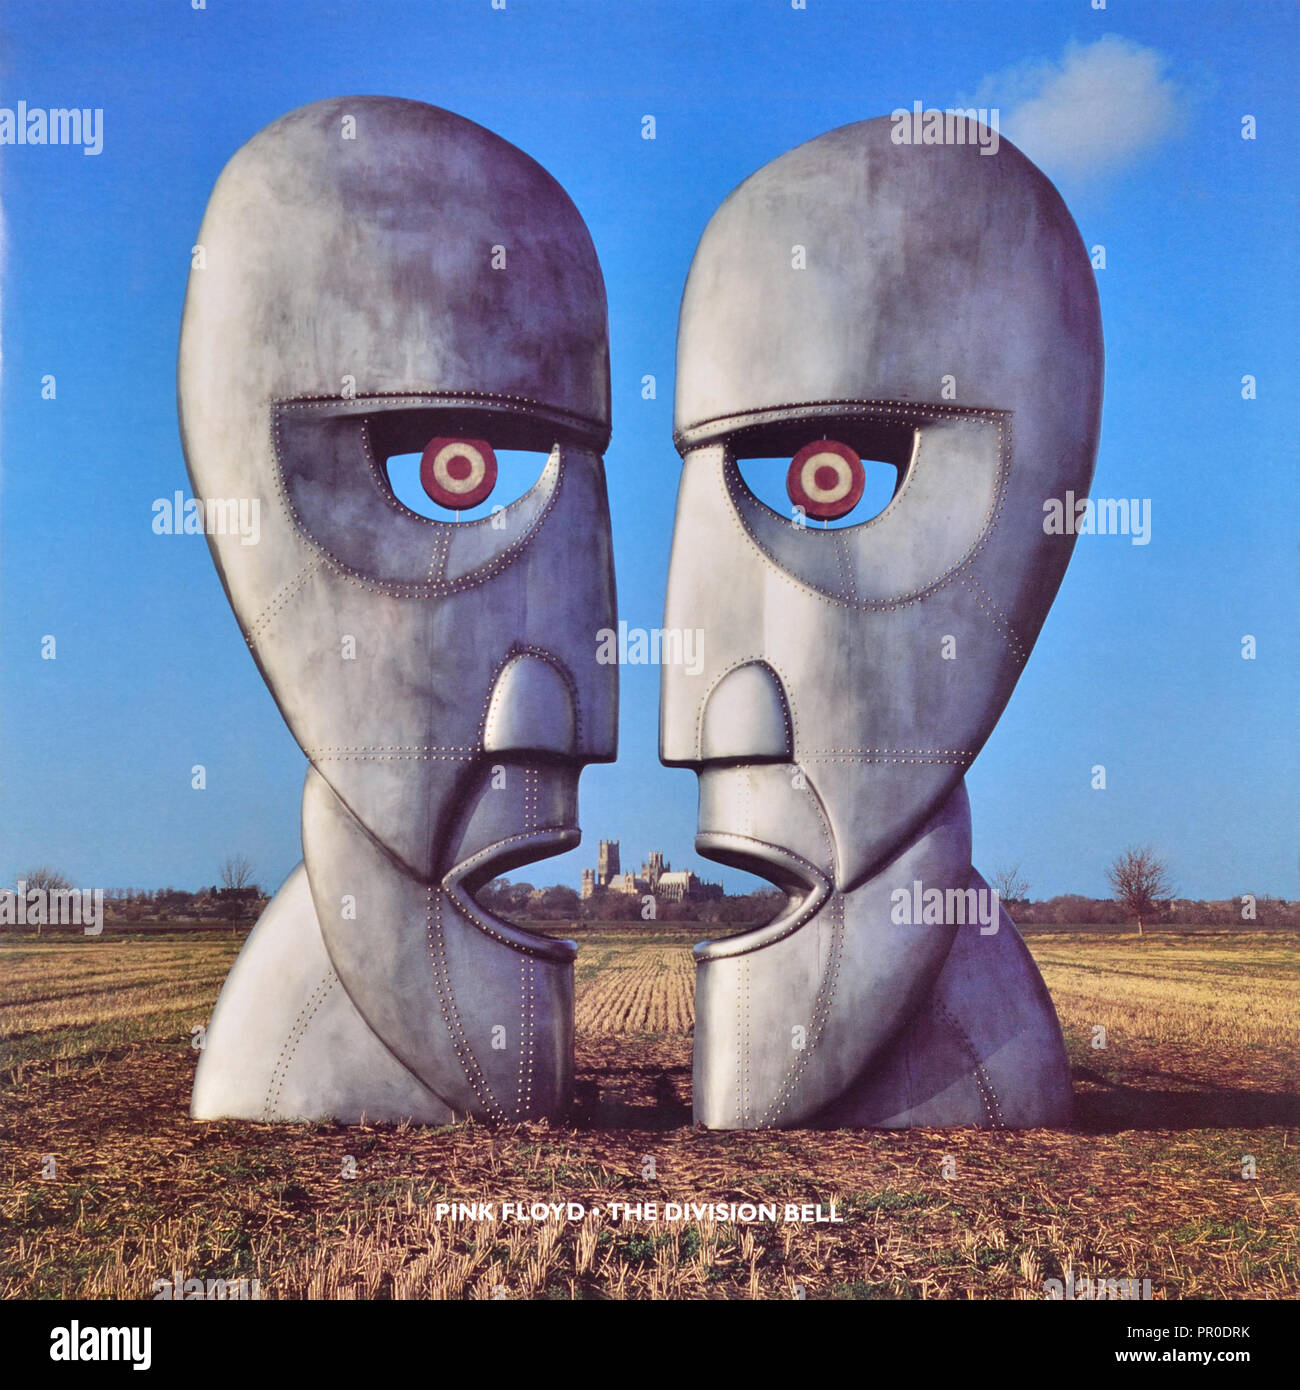 Pink Floyd - original vinyl album cover - The division bell - 1994 Stock  Photo - Alamy